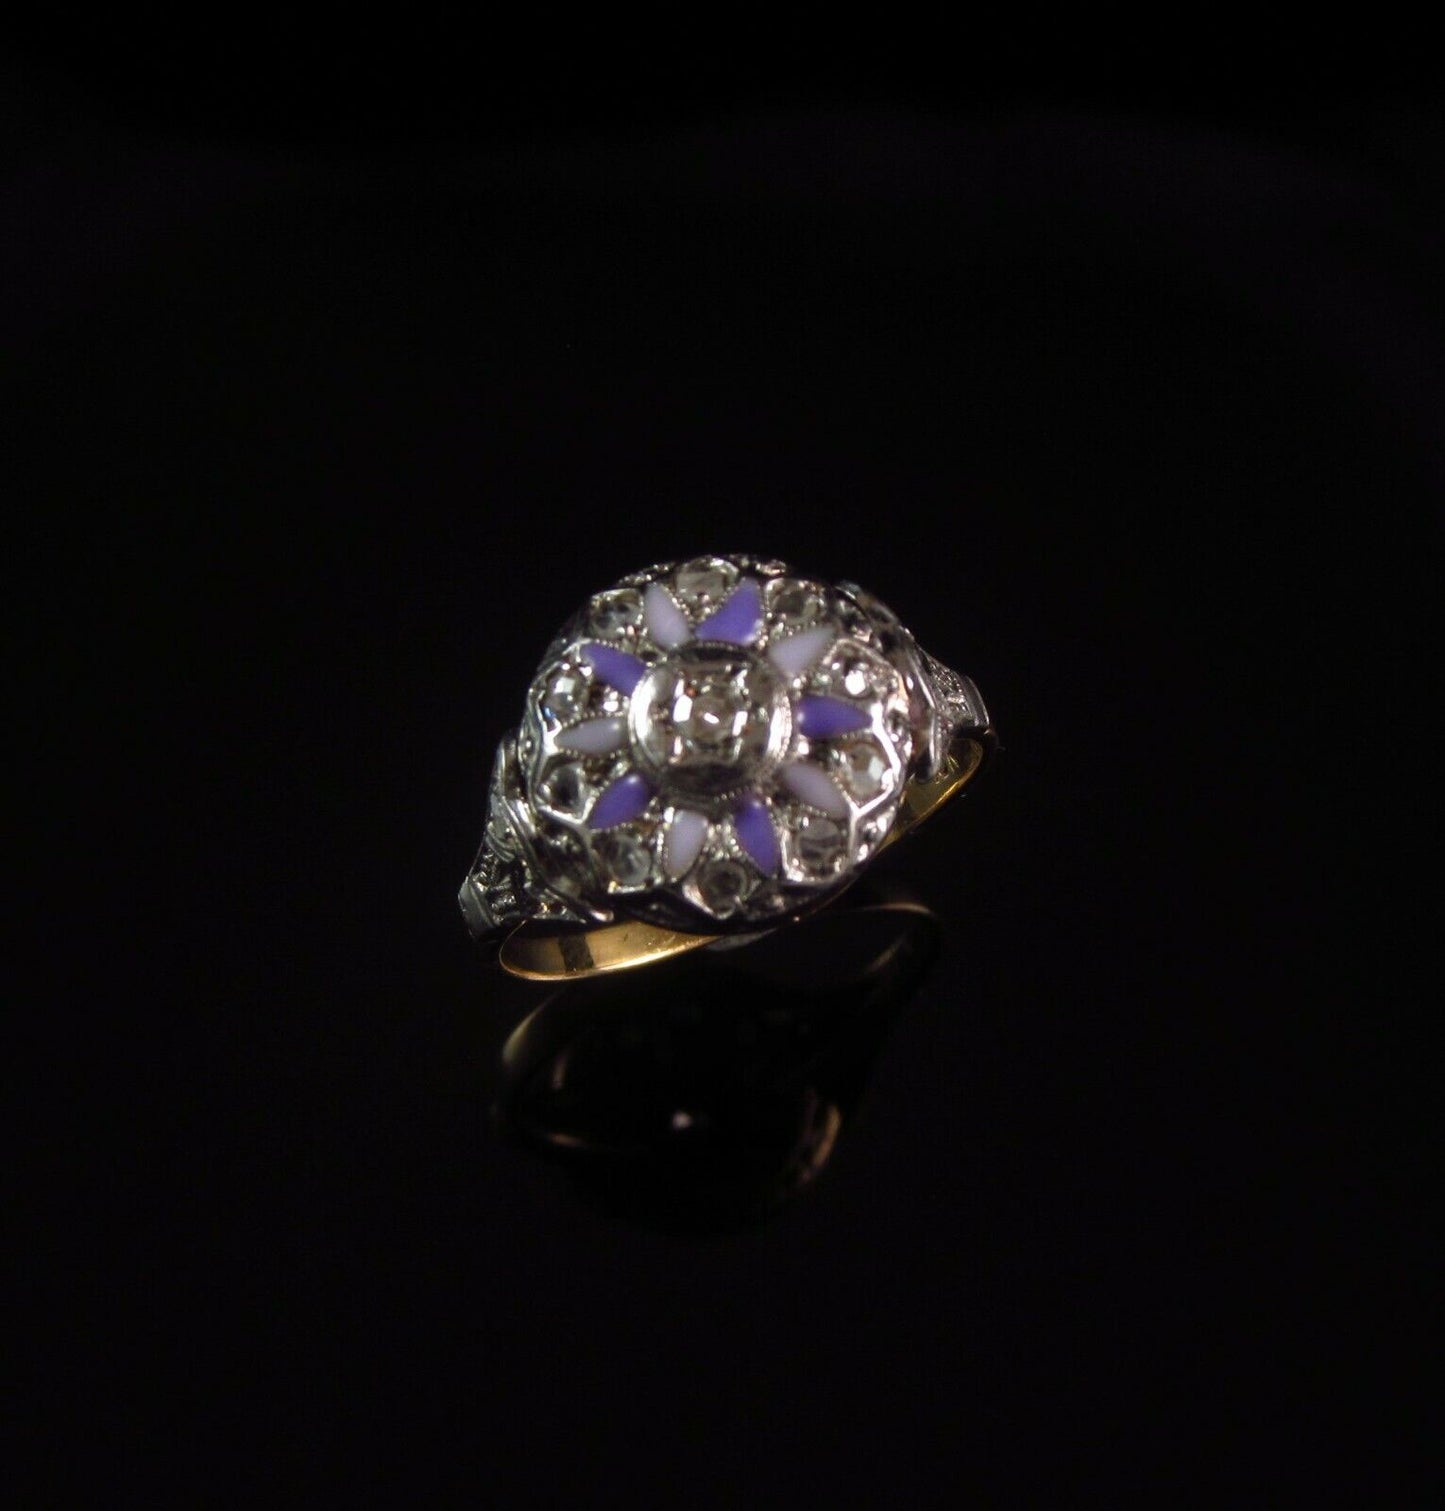 Antique Ladies 18k Gold & Platinum Topped Enamel Diamond Flower Ring Size 7